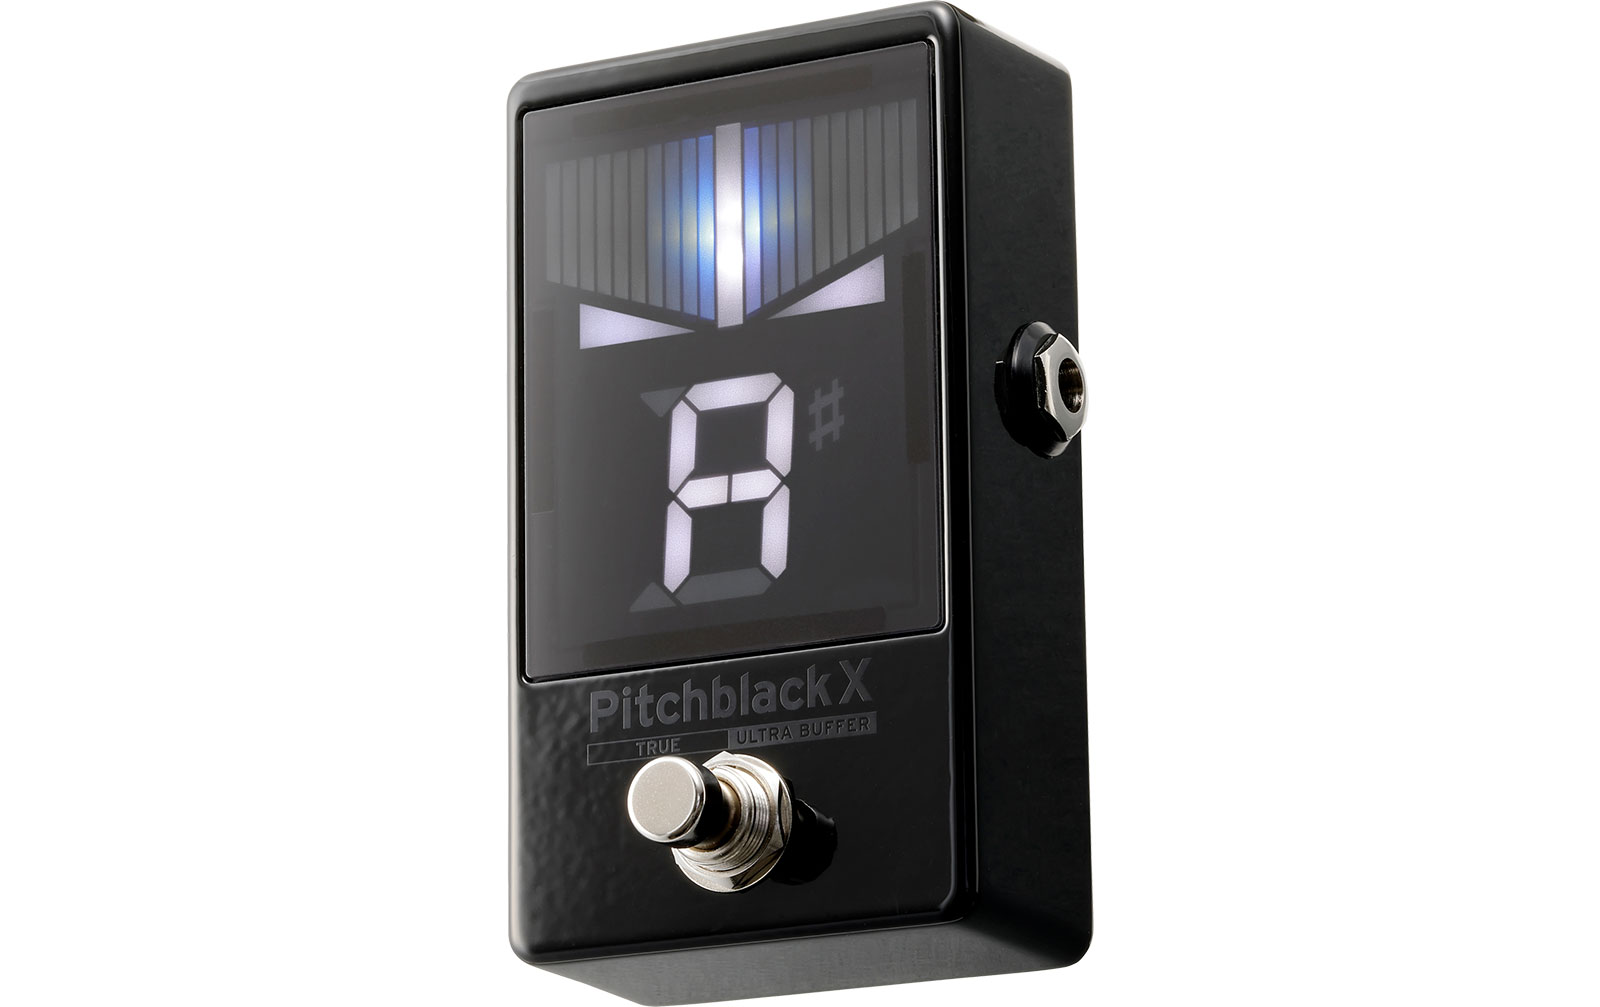 Korg Pitchblack X Stimmgerät, schwarz von Korg